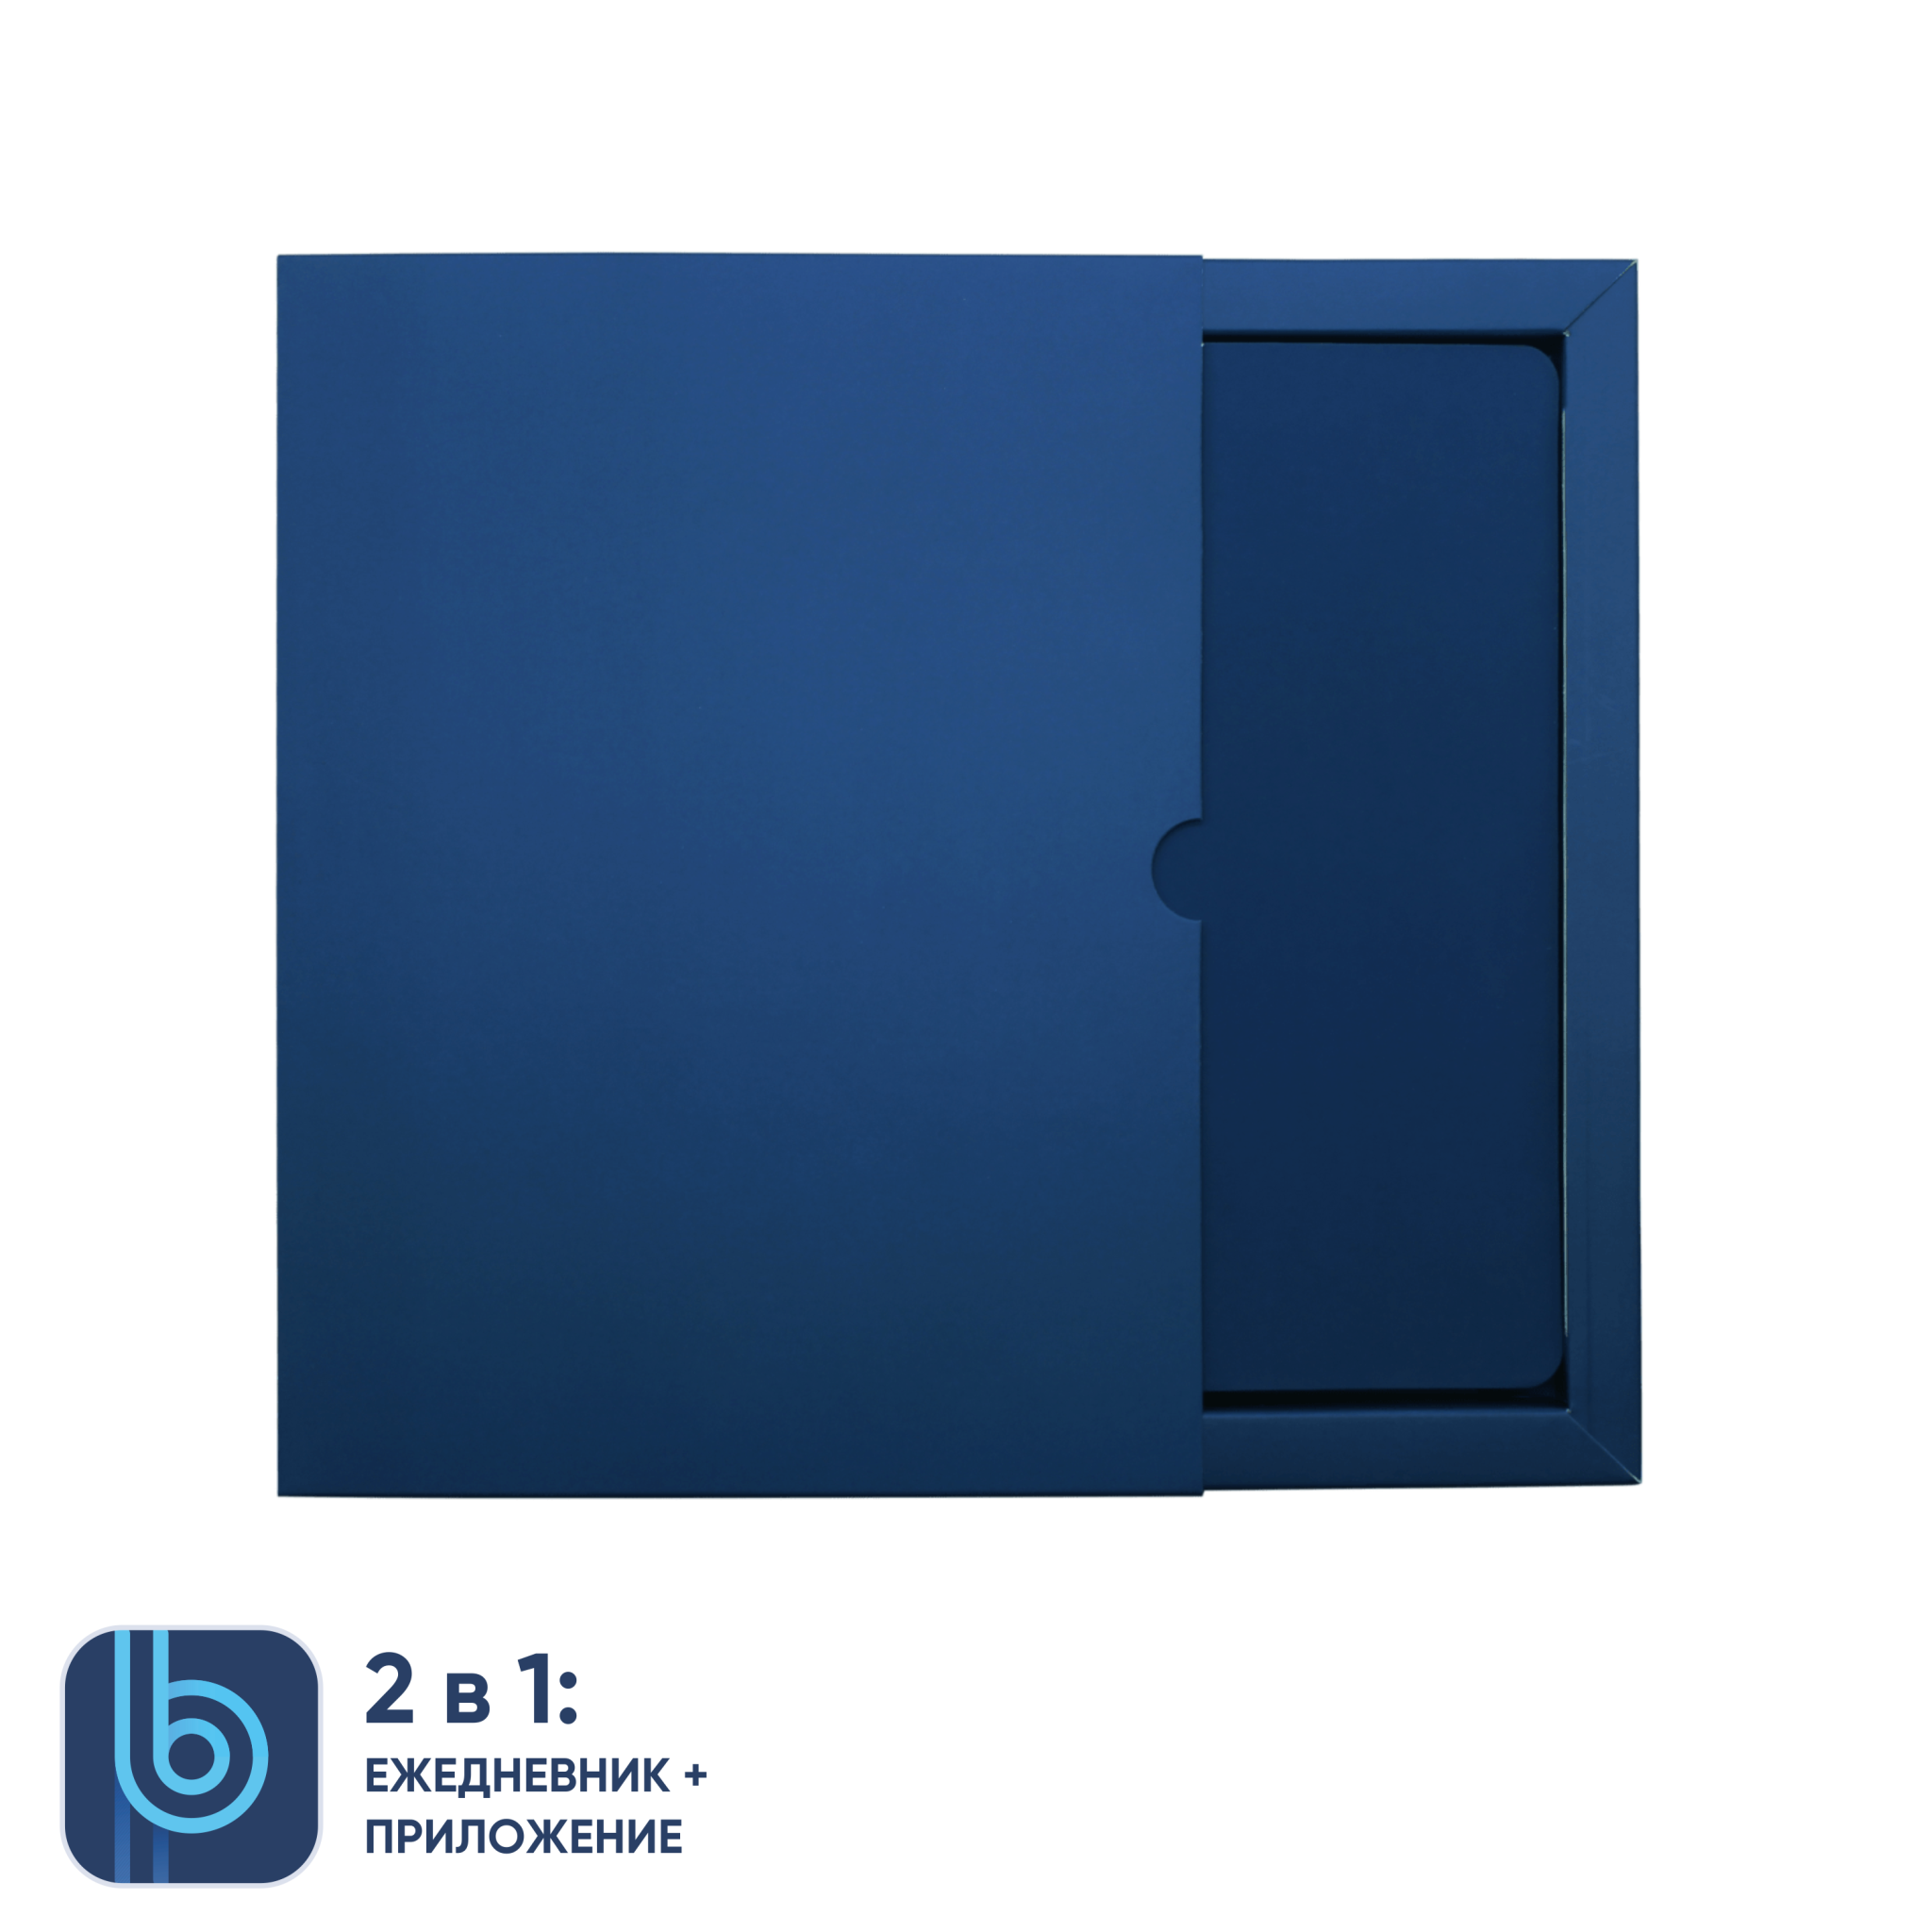 Ежедневник Bplanner.01 в подарочной коробке (синий), синий, картон